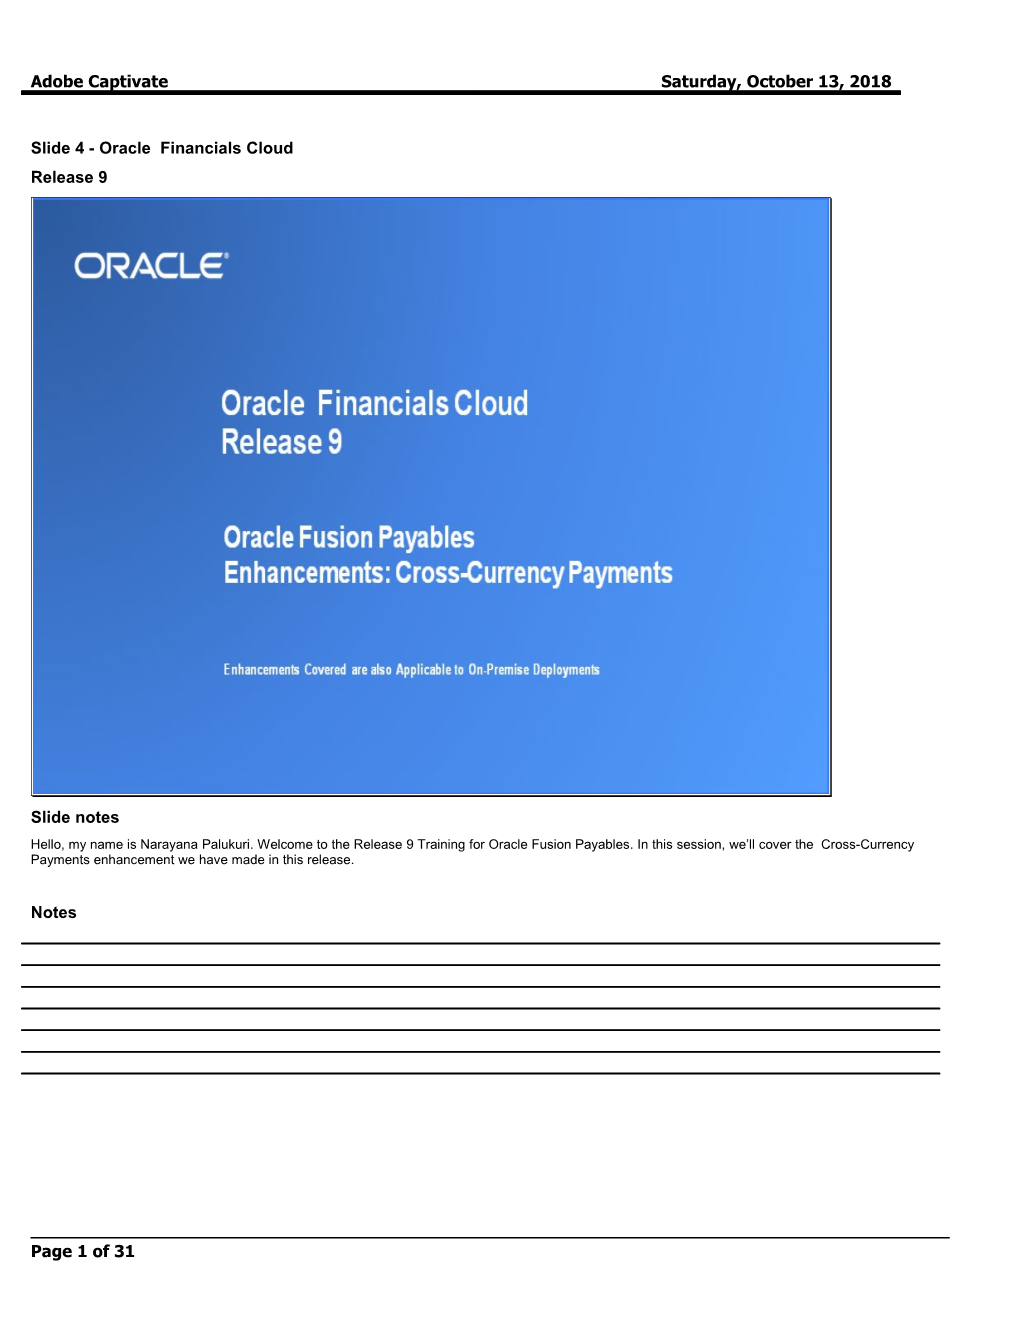 Slide 4 - Oracle Financials Cloud